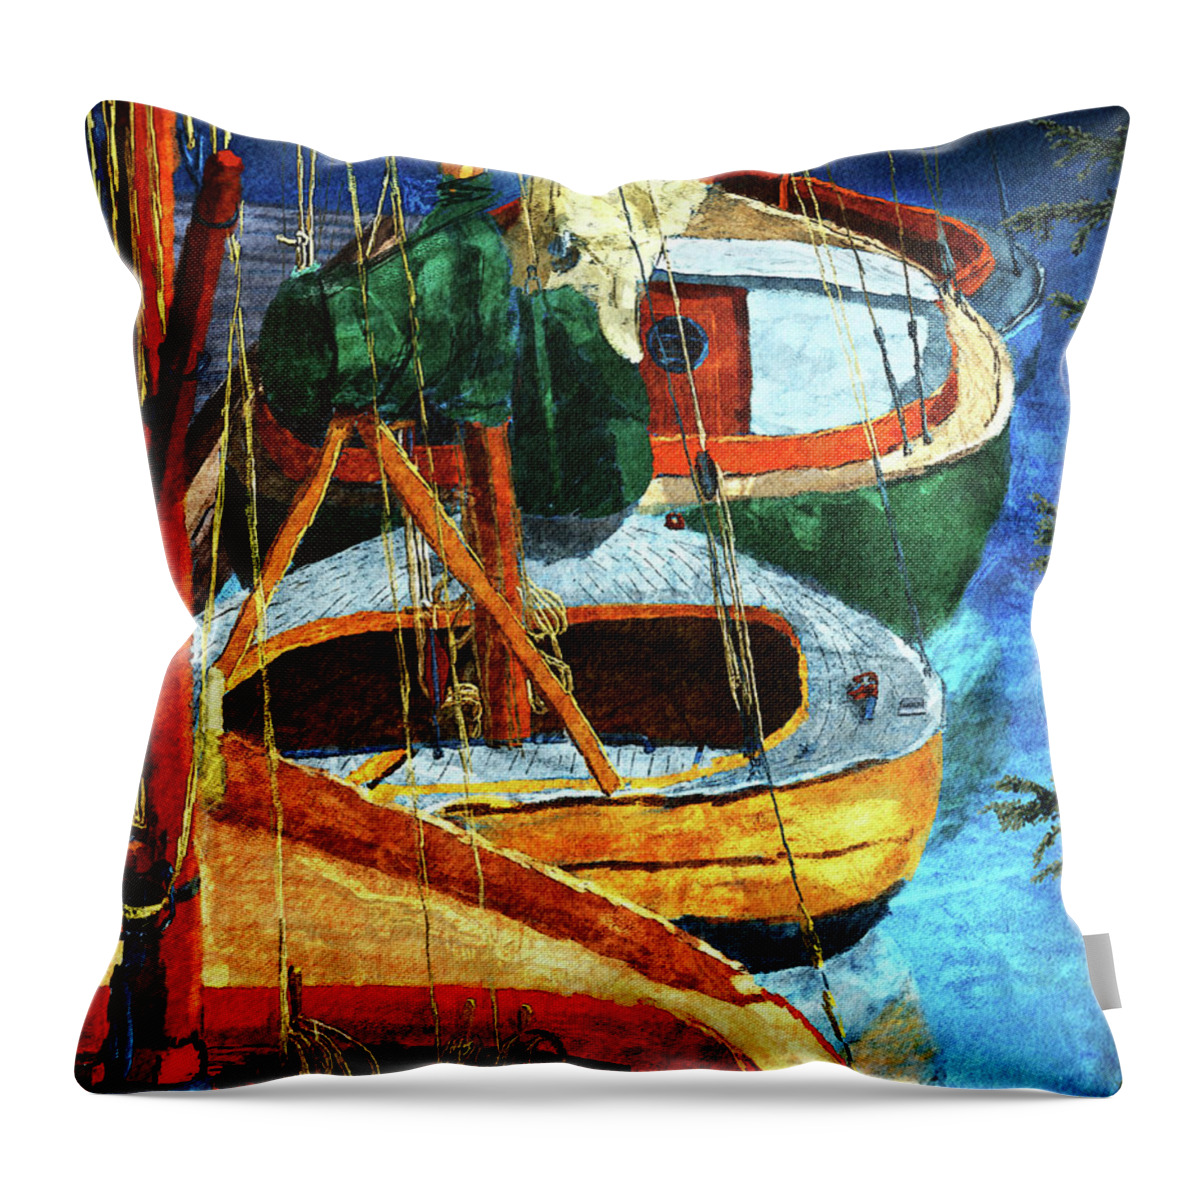 Sailboats Throw Pillow featuring the digital art Sailboats by Ken Taylor